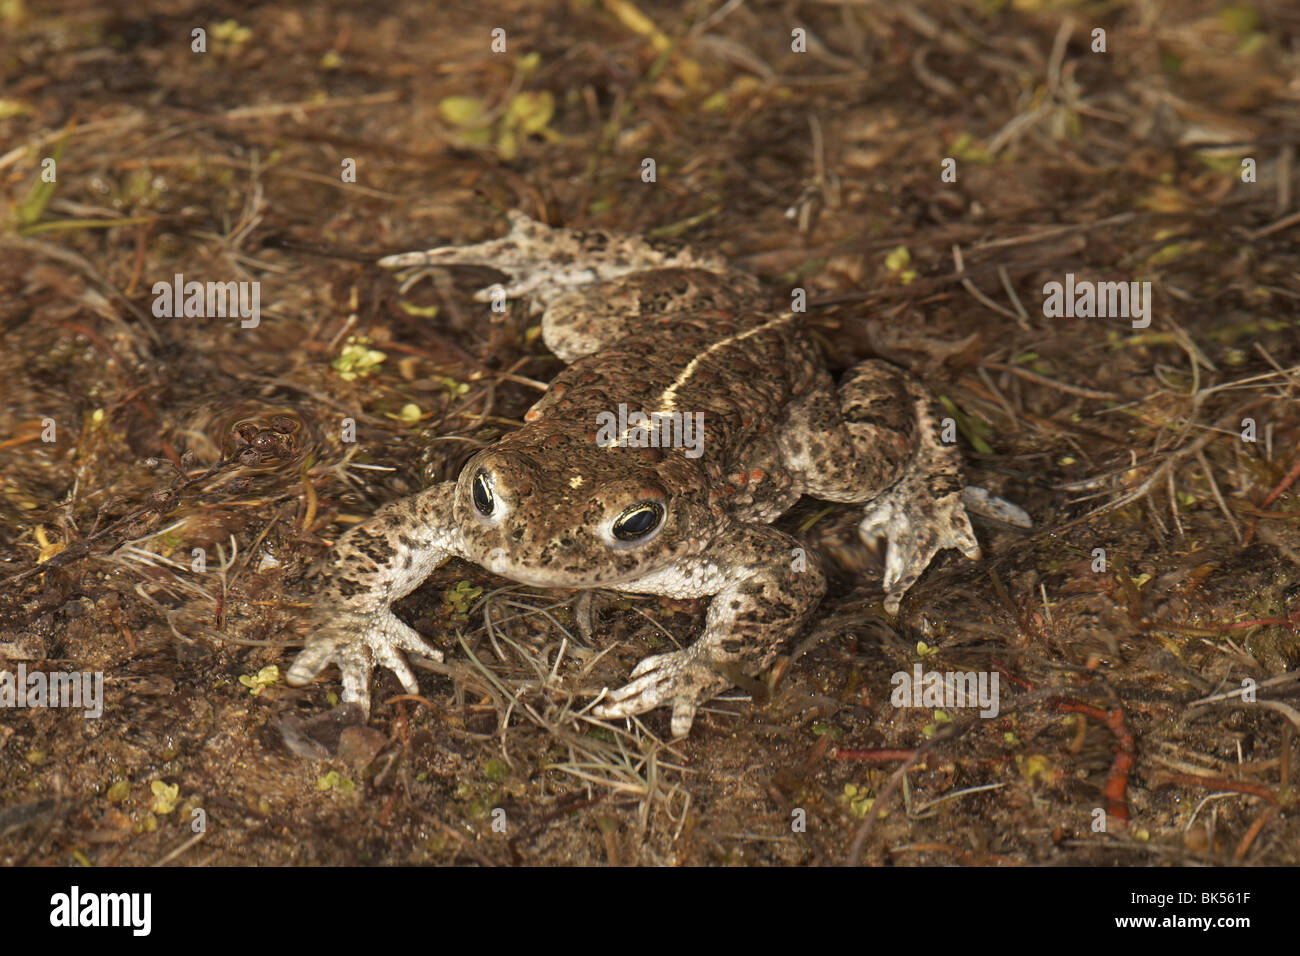 Natterjack toad, Bufo calamita Ainsdale sand dunes nature reserve, Merreyside, UK. Stock Photo